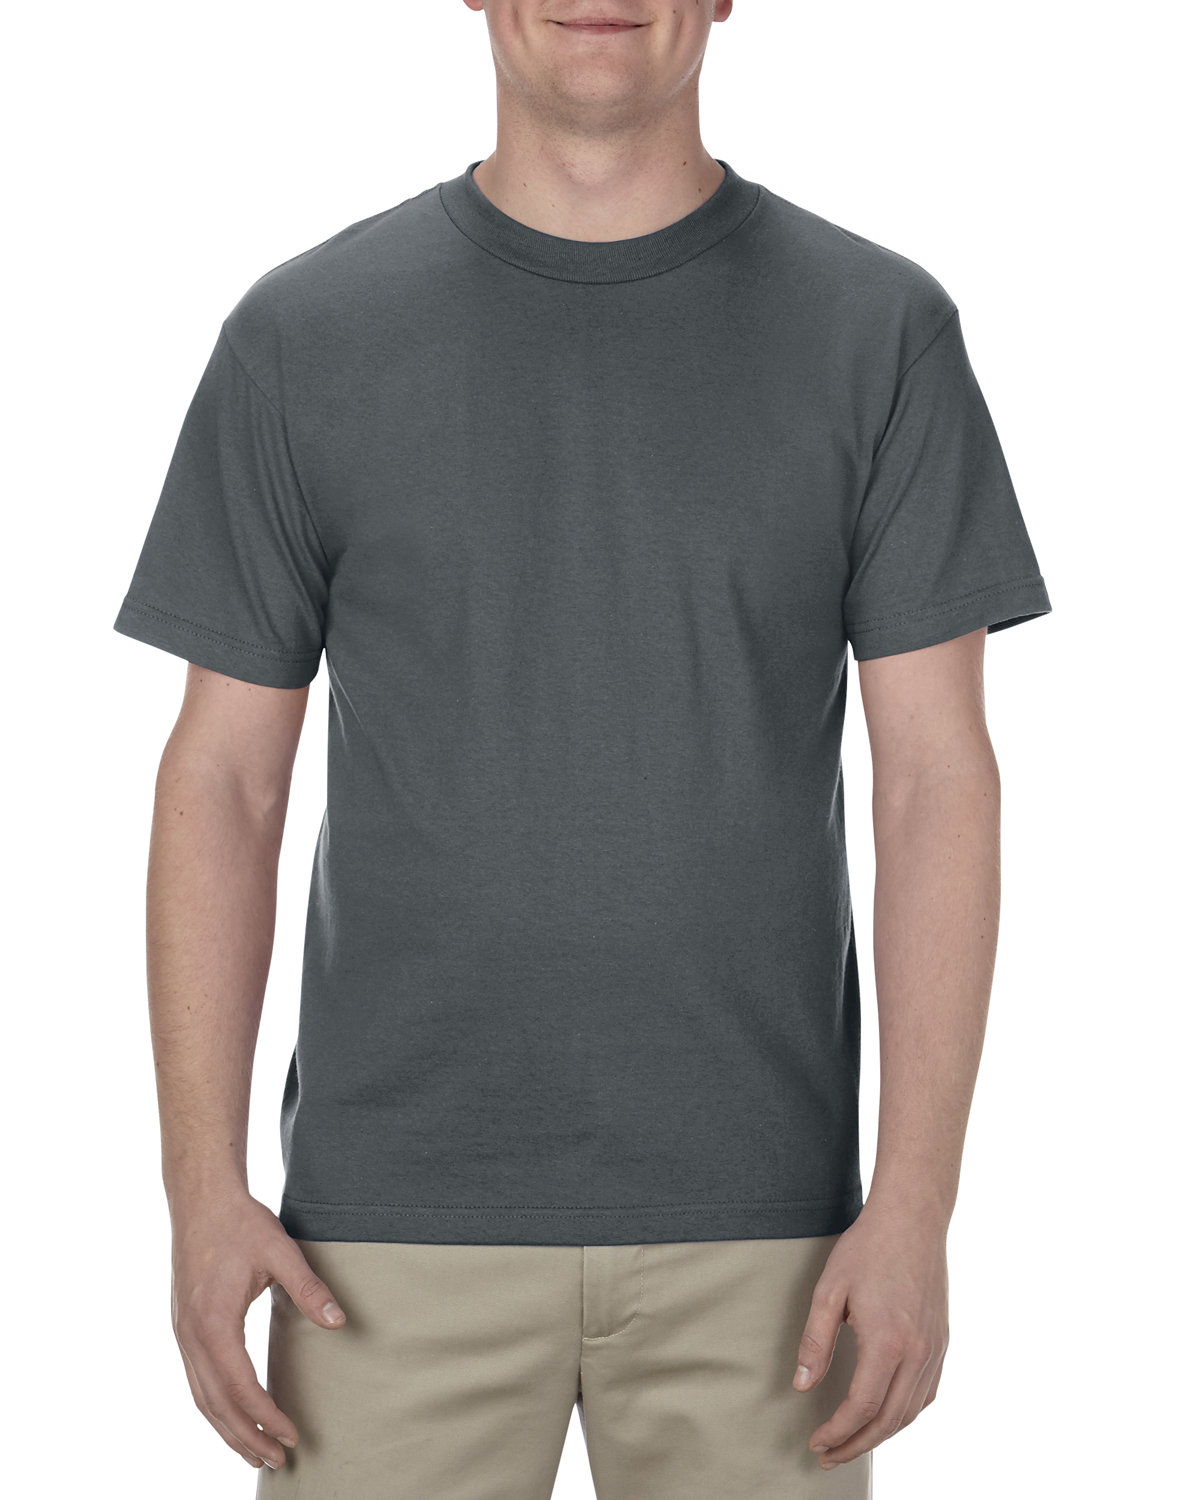 American Apparel Unisex Heavyweight Cotton T-Shirt charcoal 